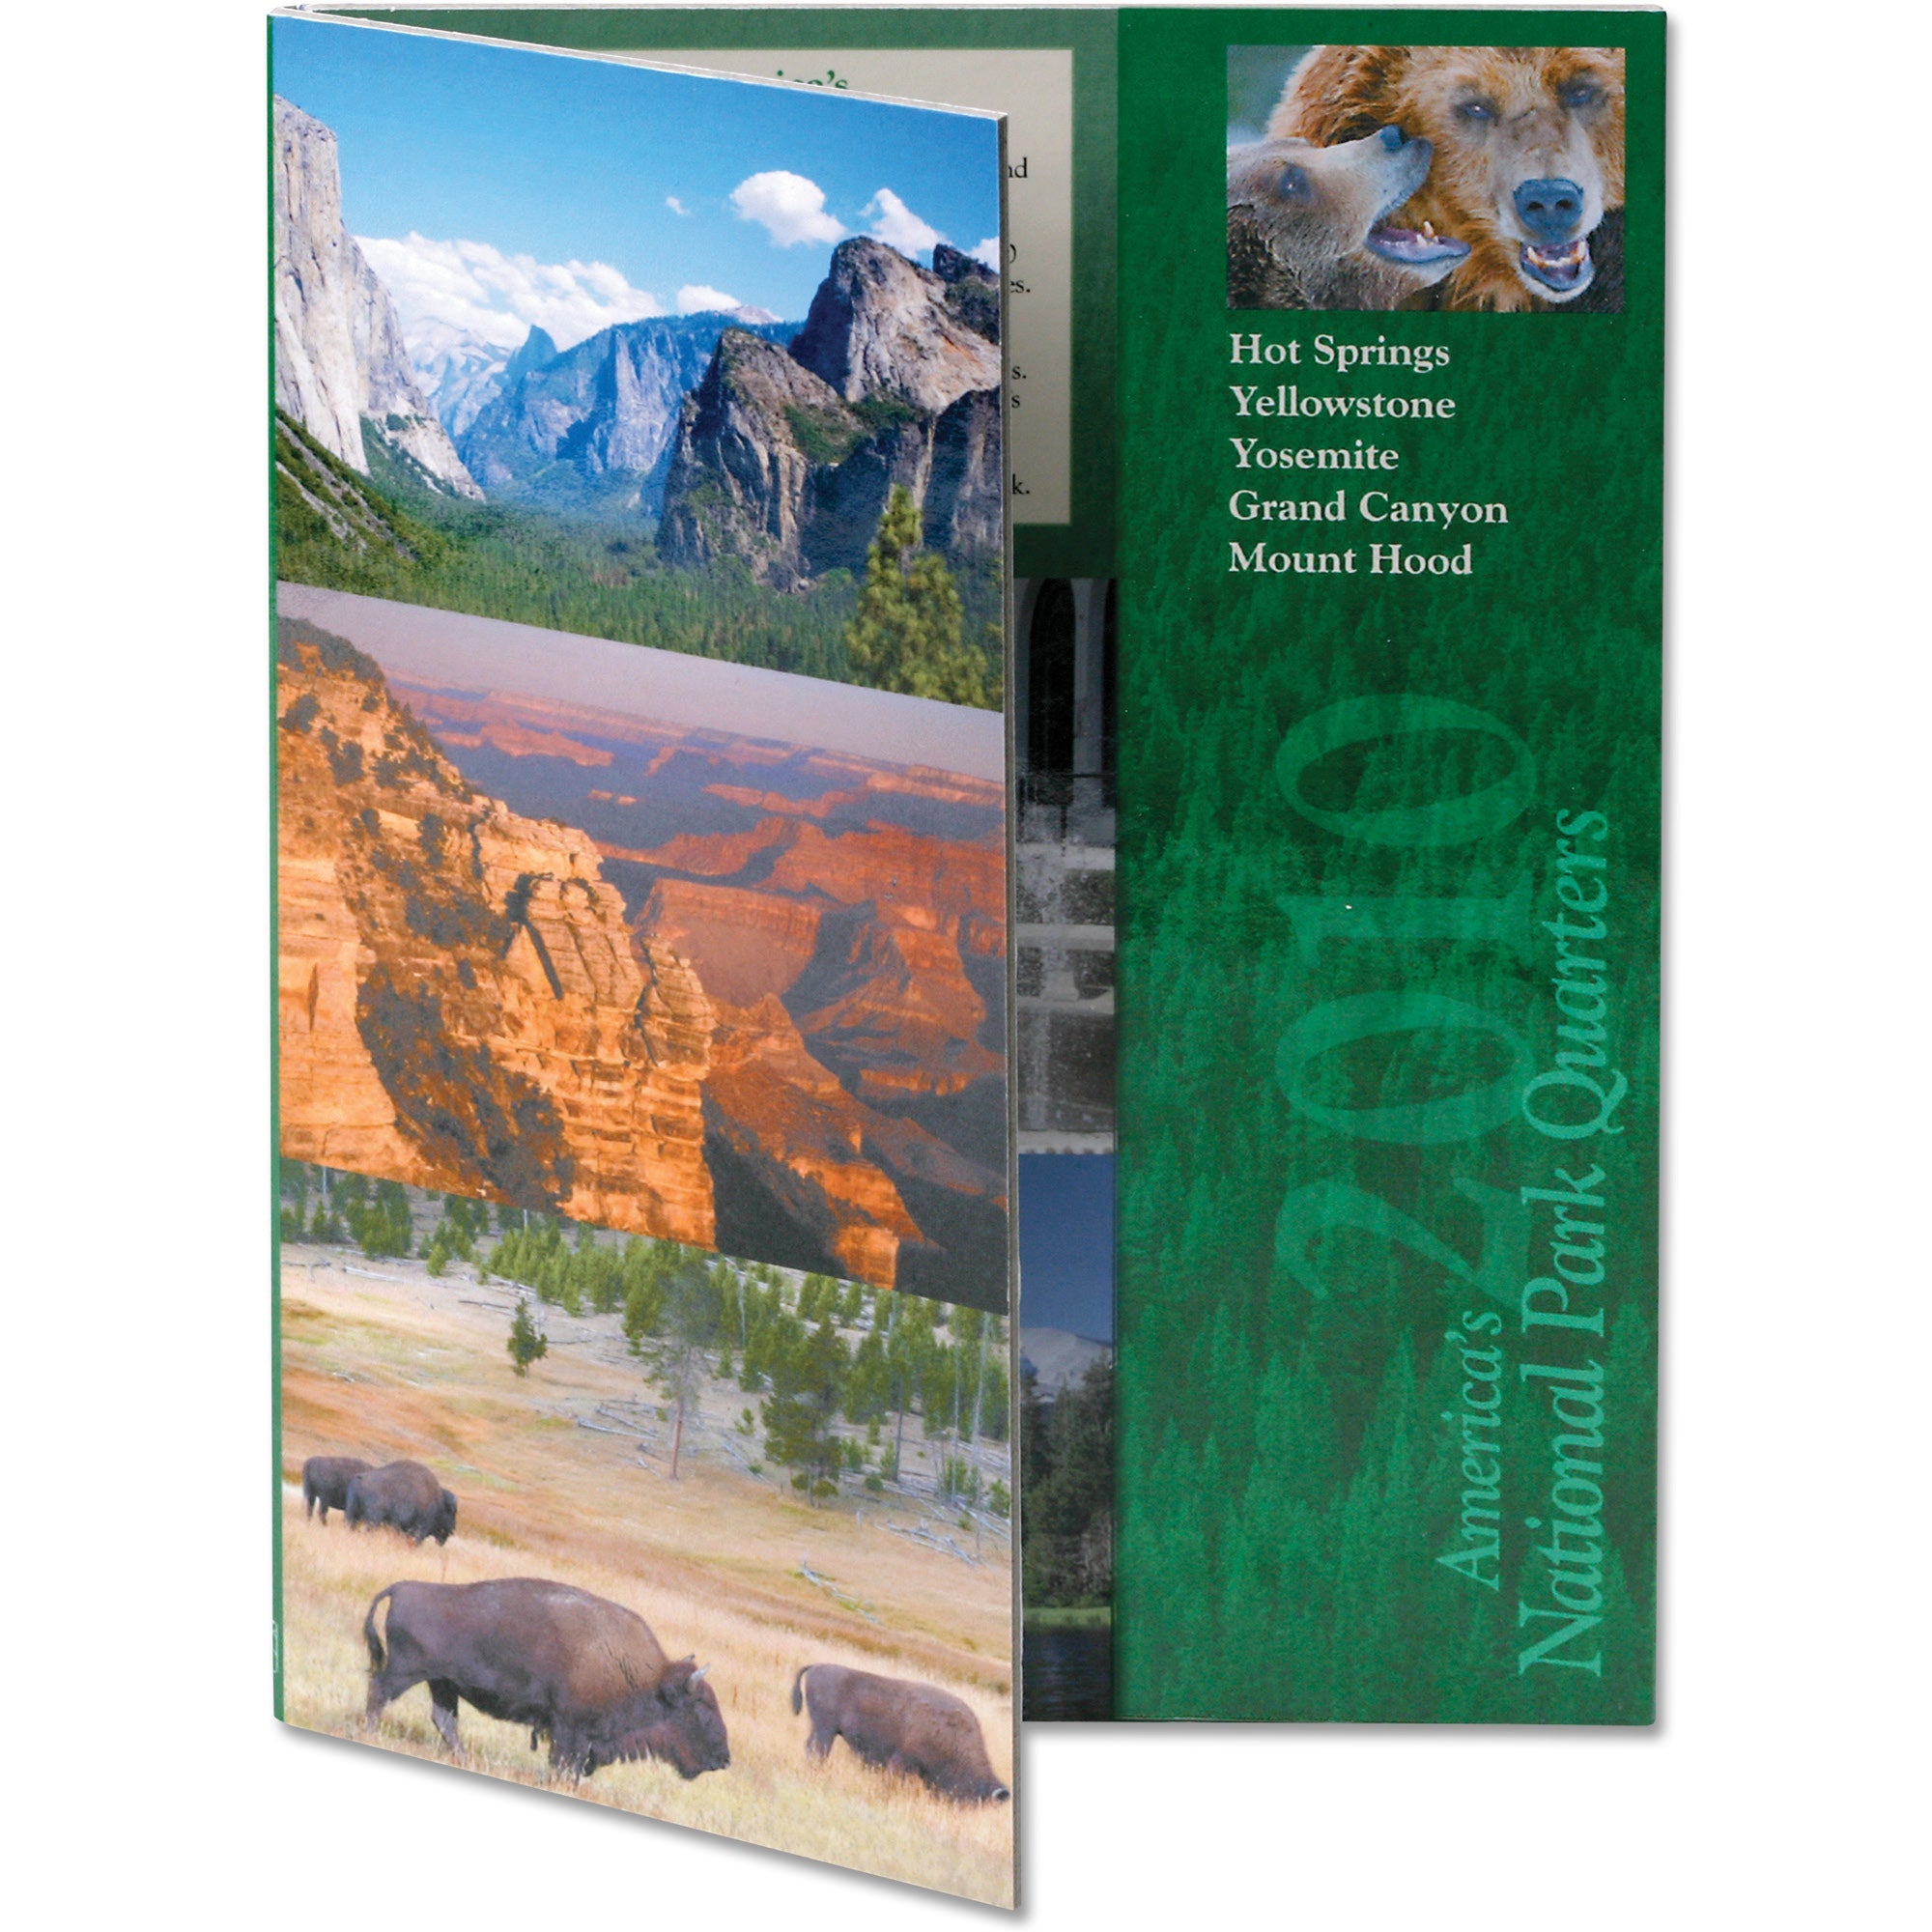 2010 America's National Park Quarter Series Colorful Folder Littleton